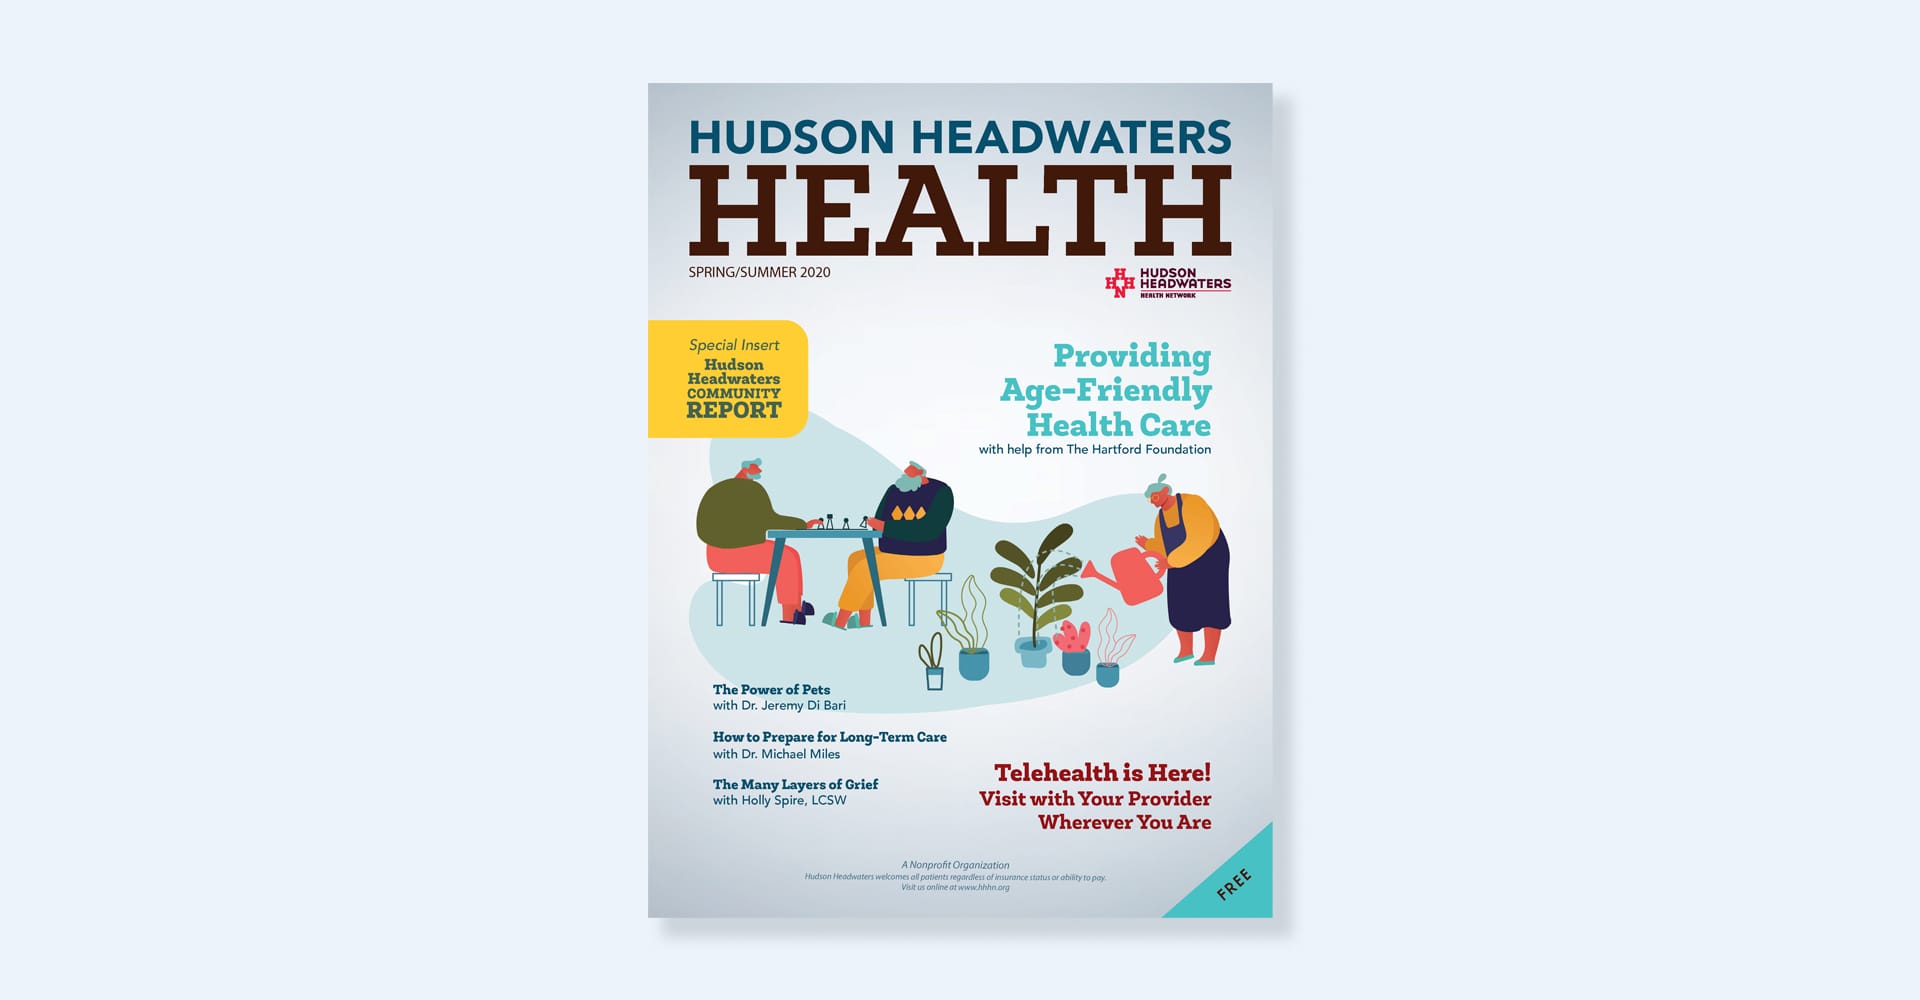 Spring/Summer 2020 Hudson Headwater Health Magazine cover